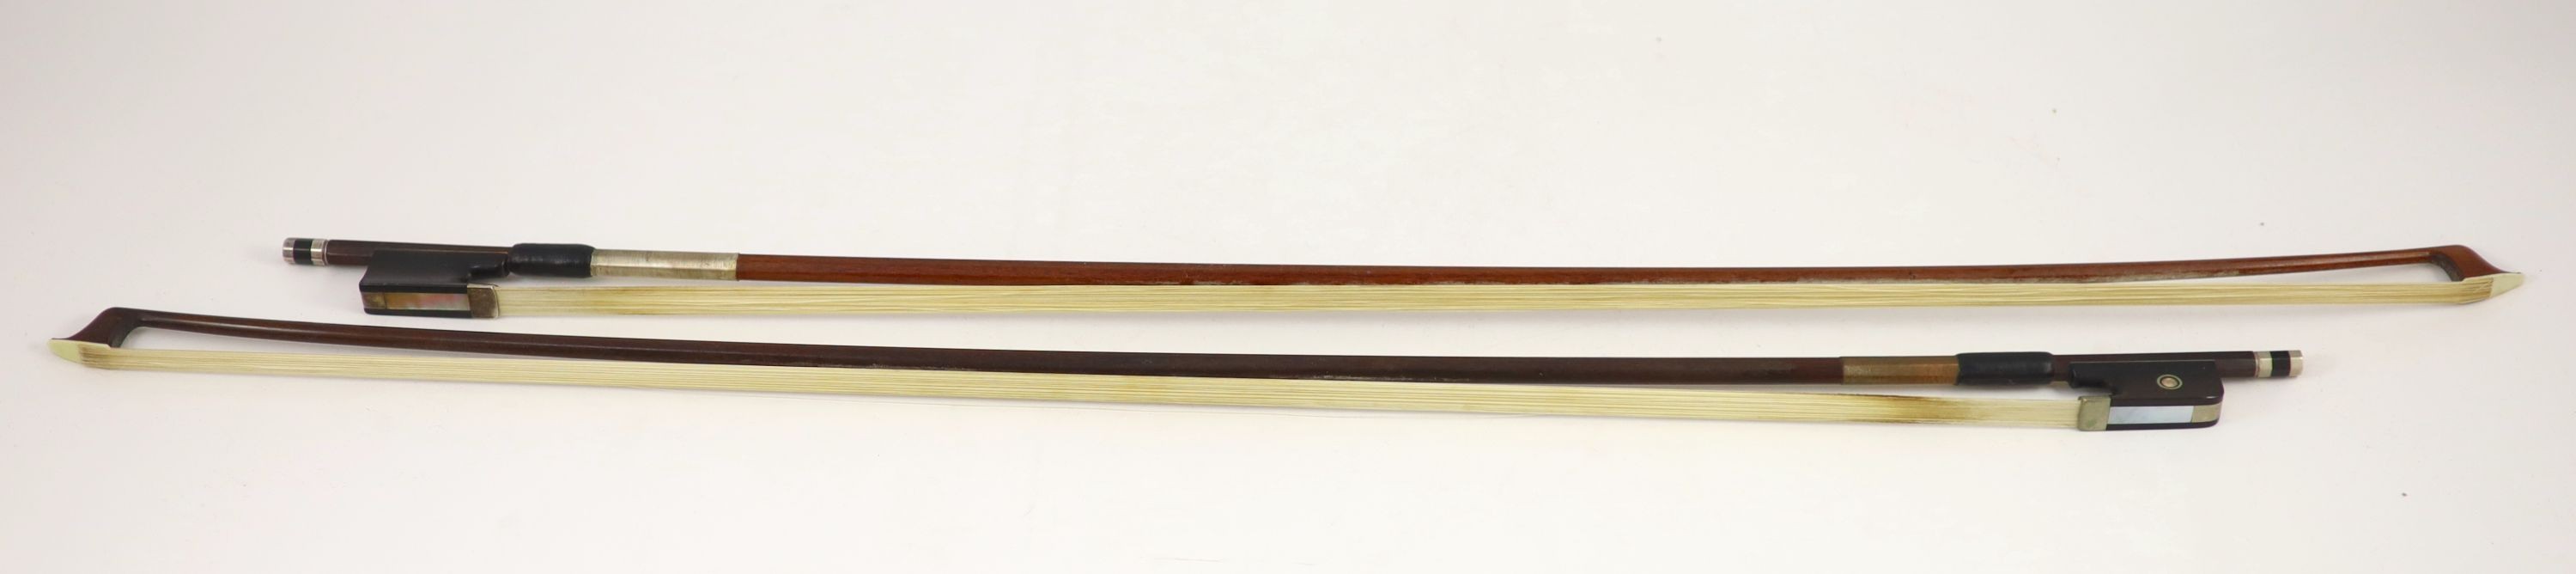 Two violin Bows, Both 74.5 cm long